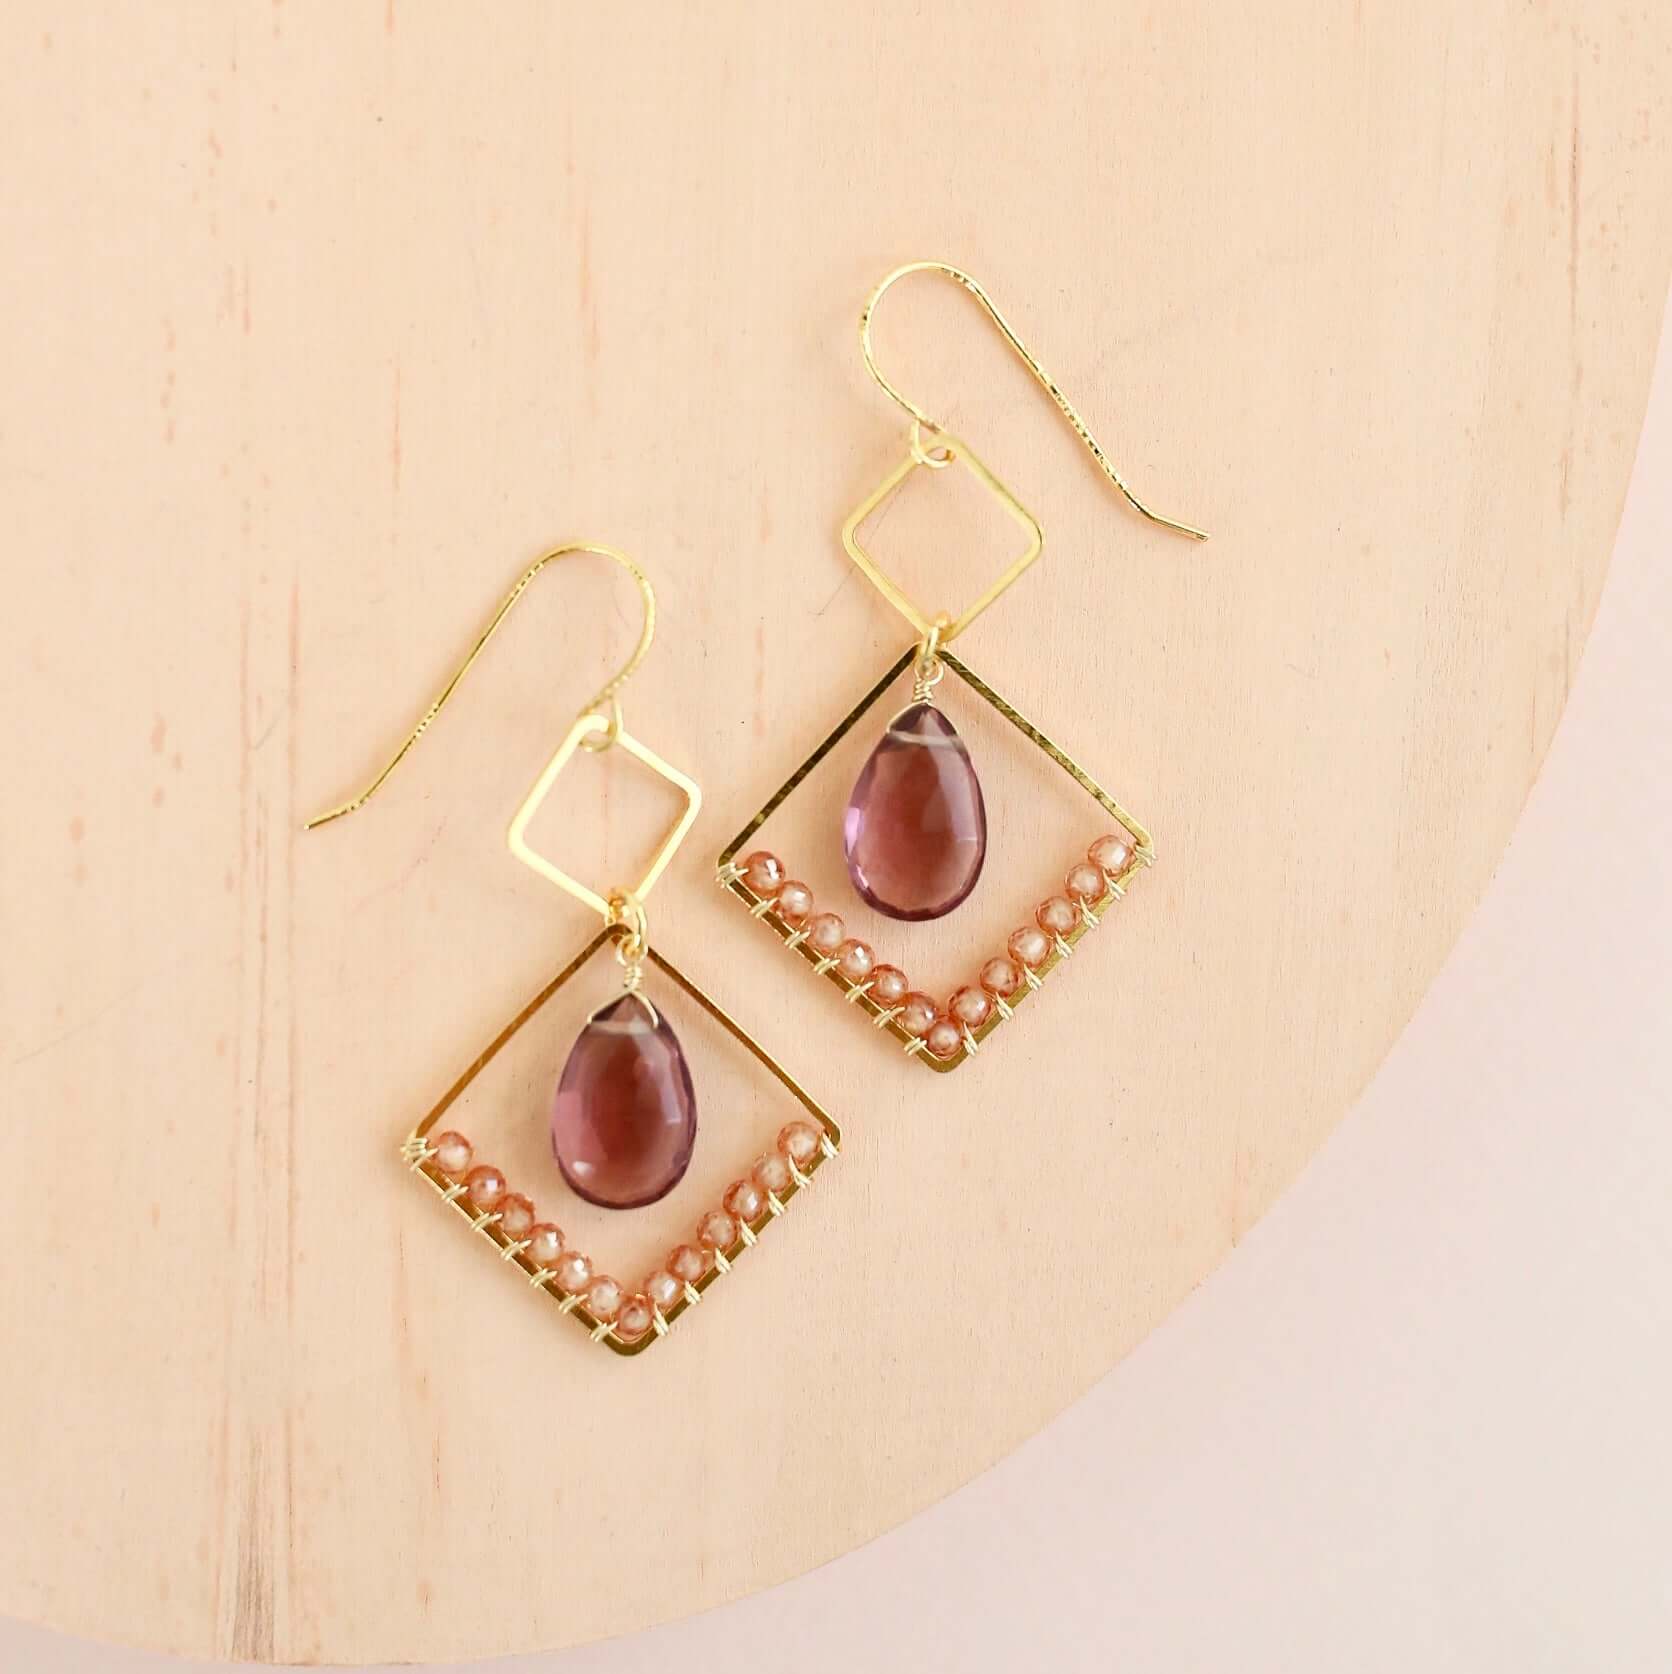 Gold geometric earrings with rhodolite garnet and champagne quartz gemstones